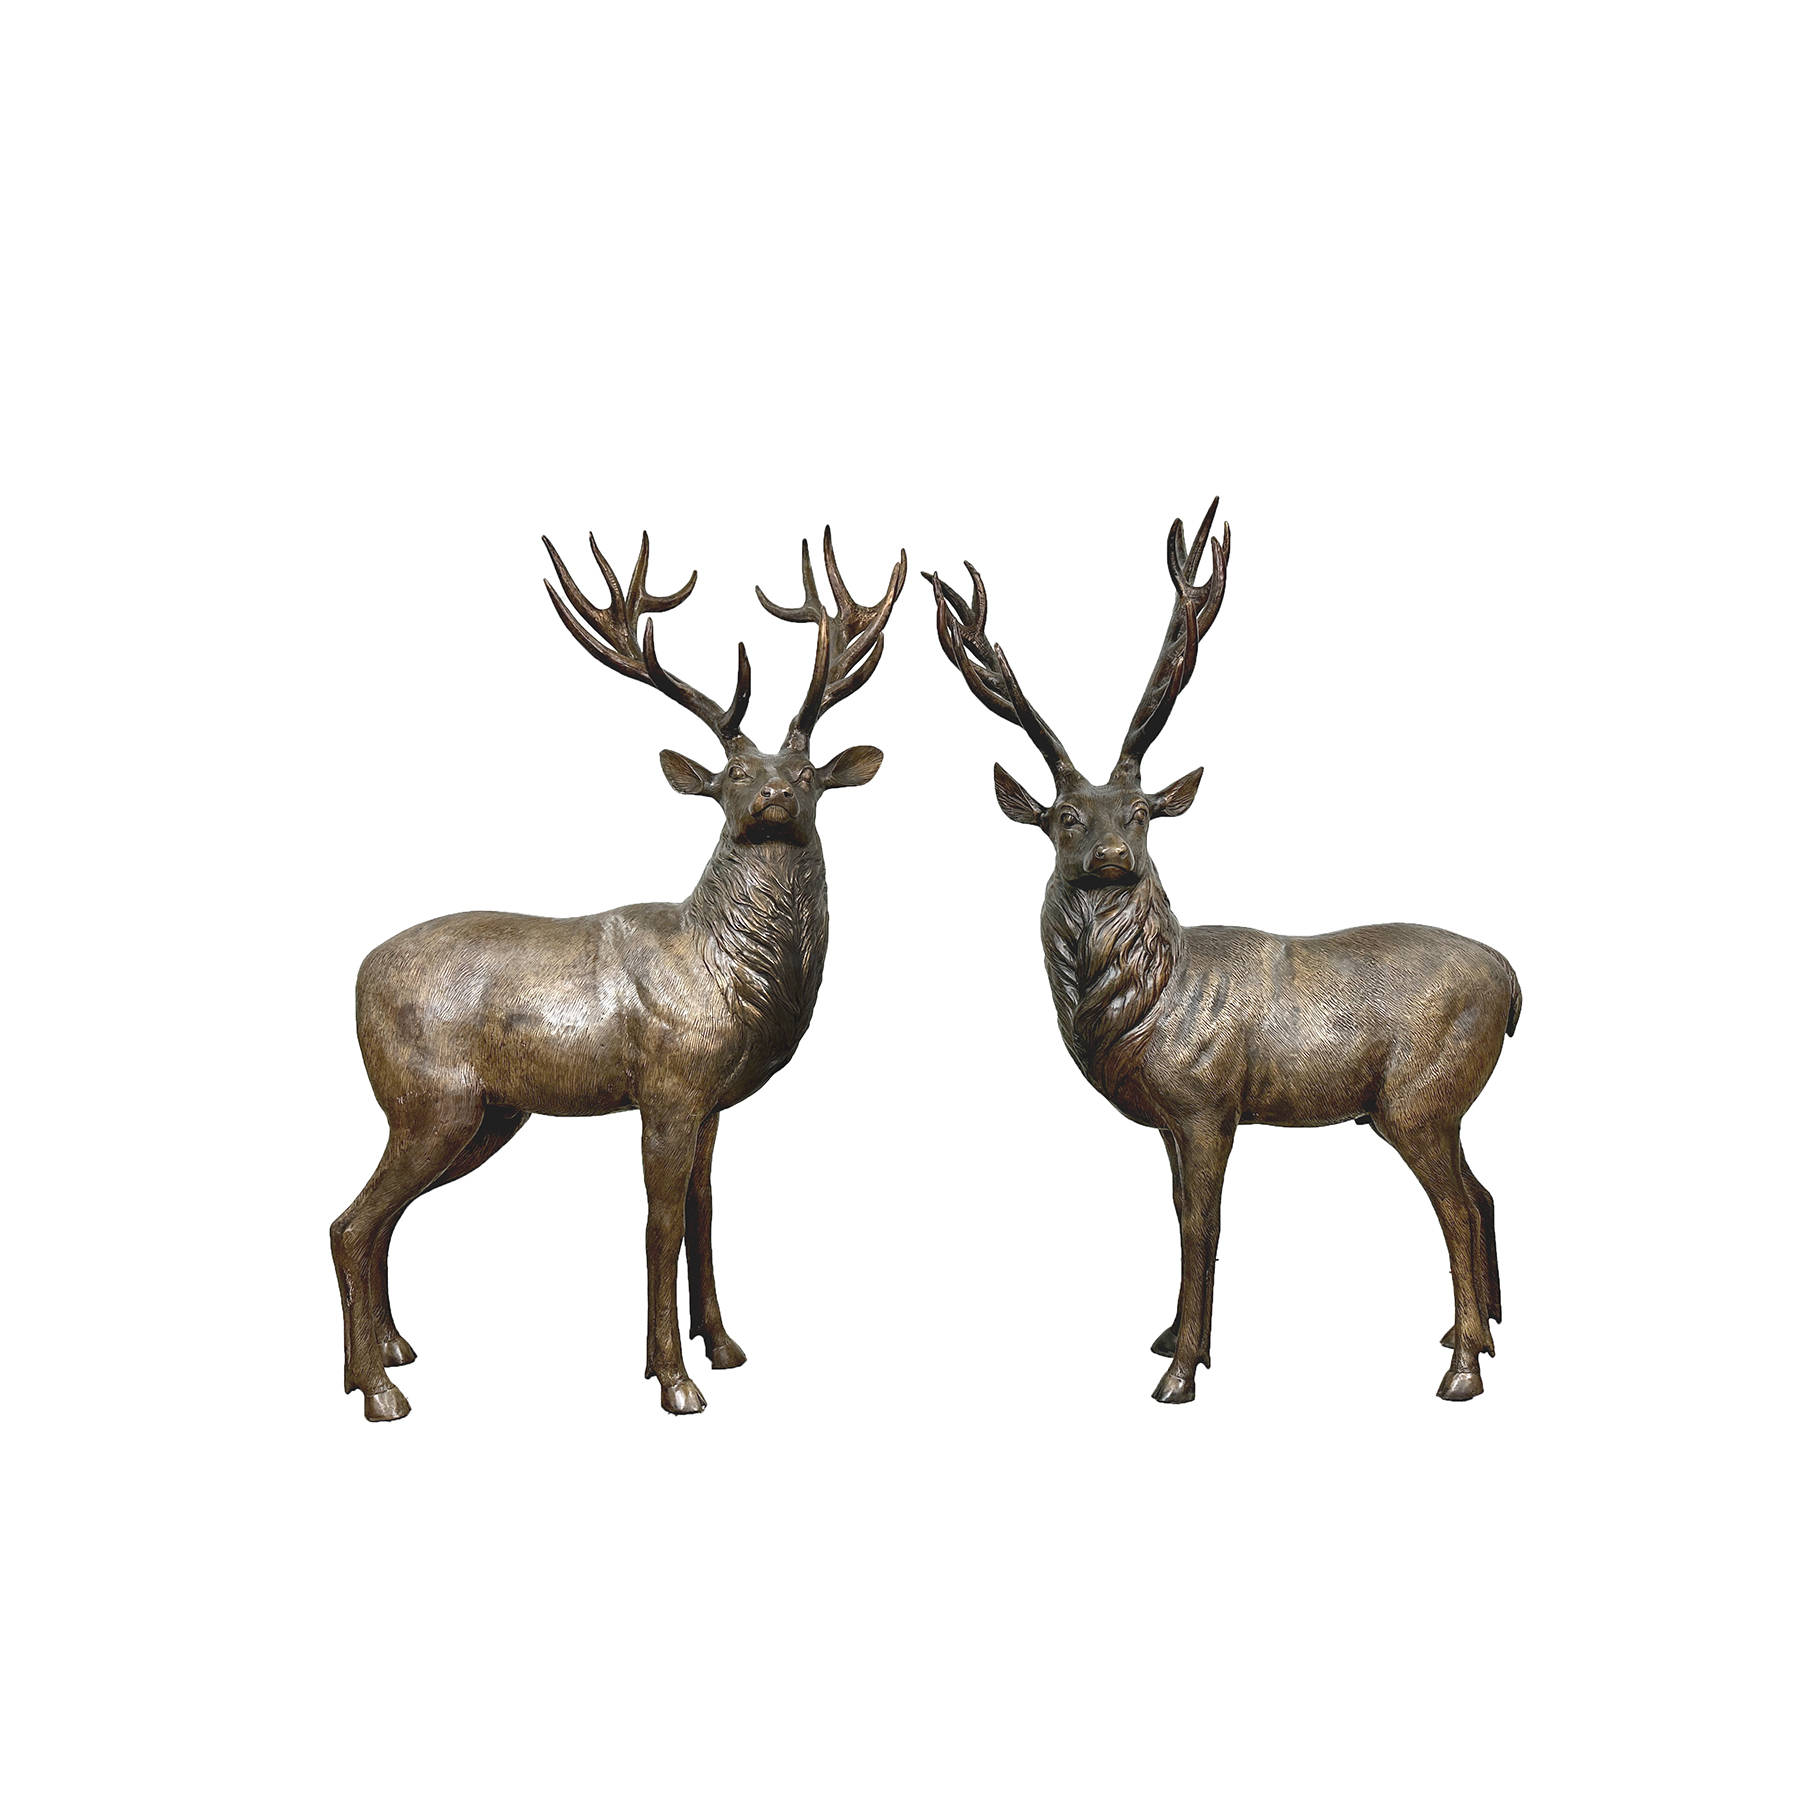 SRB706856 Bronze Medium Size Elk Sculpture Pair by Metropolitan Galleries Inc